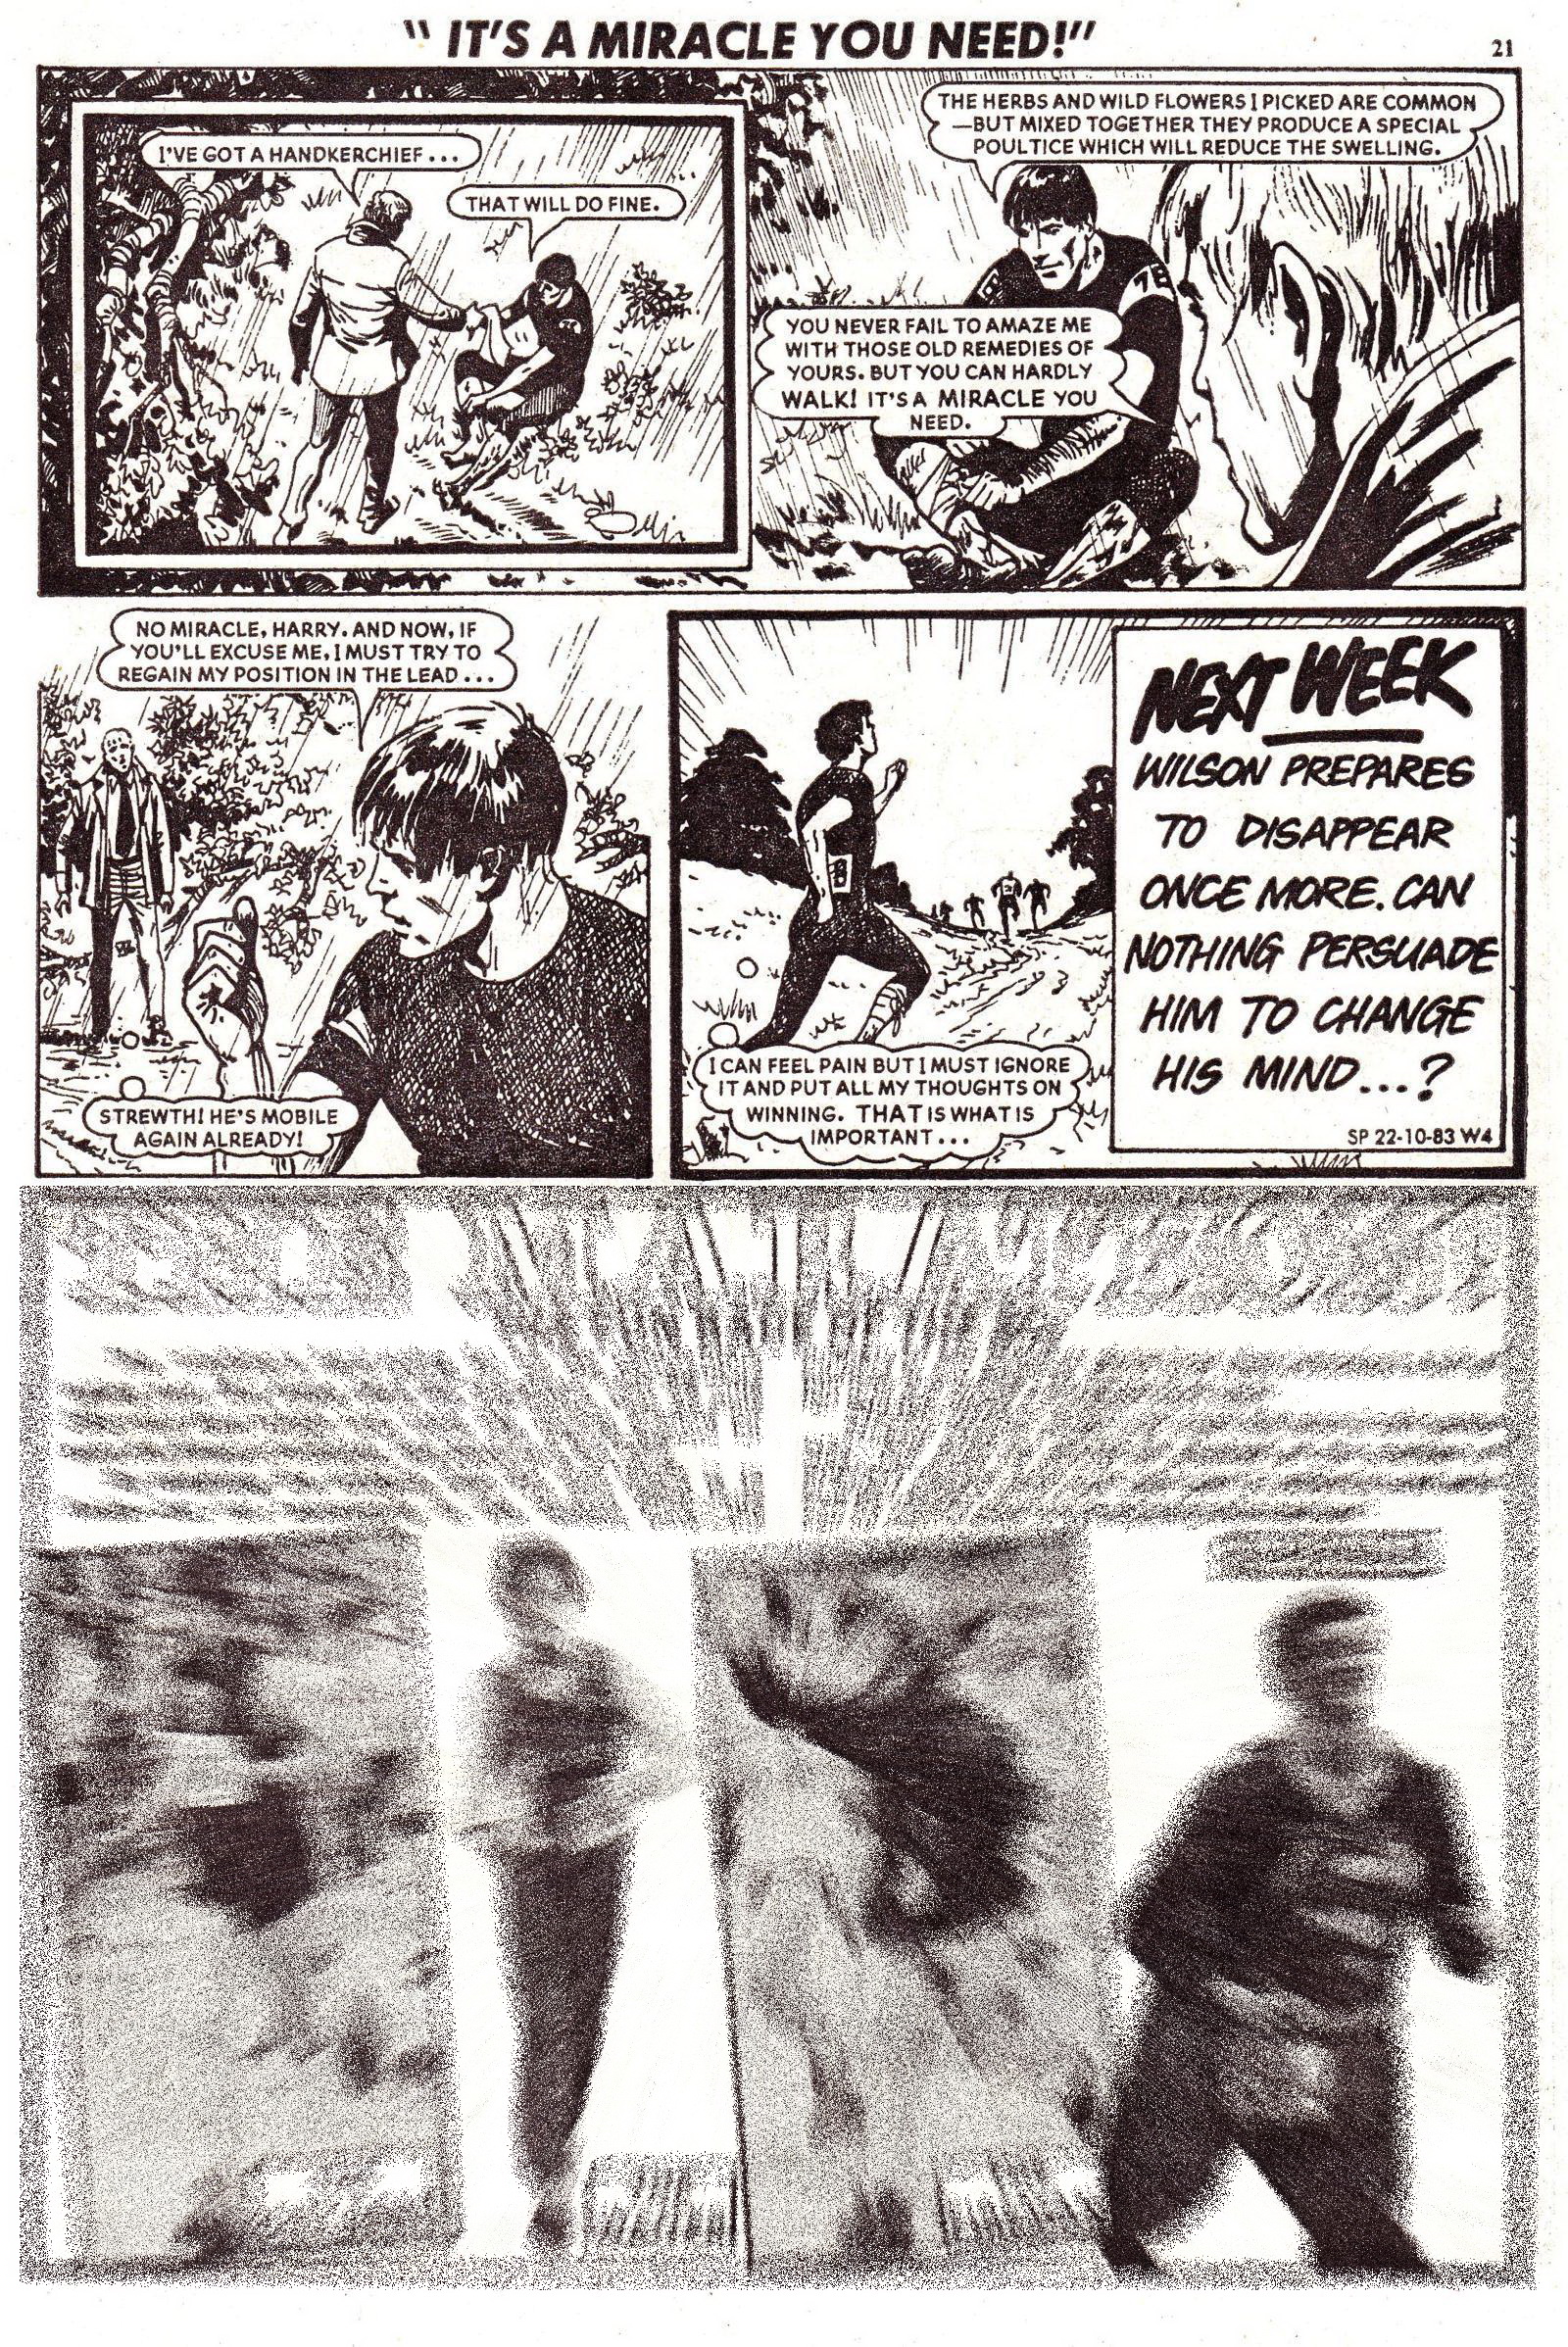 Spike 40 (1983) - Page 21